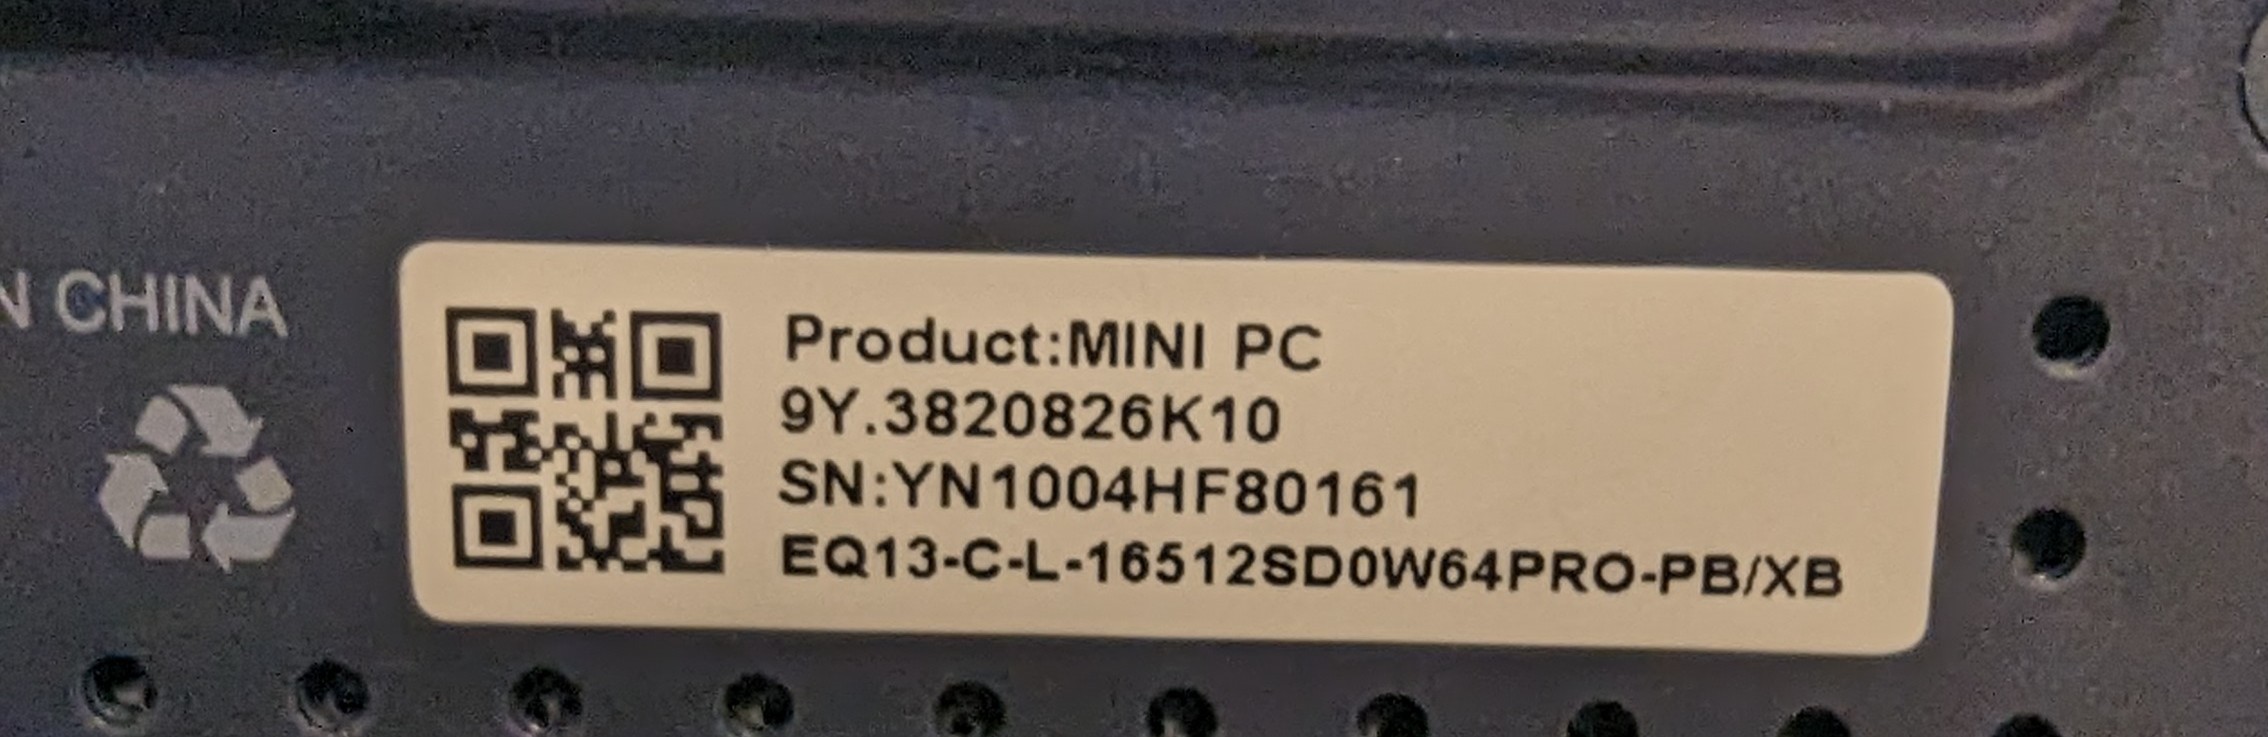 EQ13 Windows 11 Product Key Request